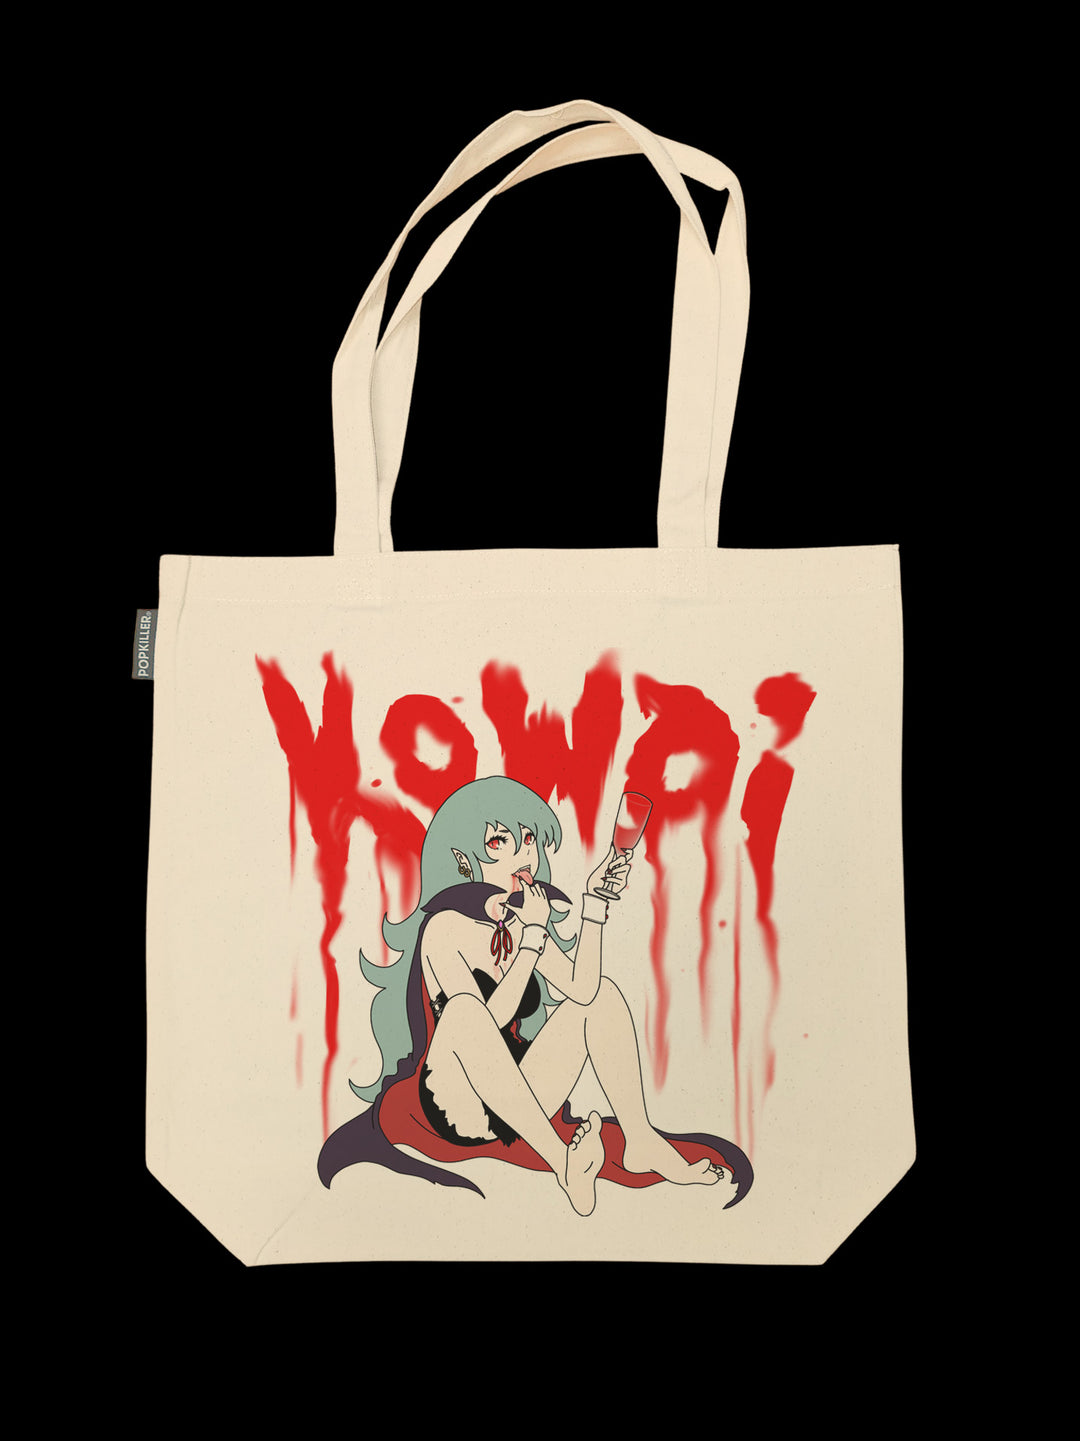 Popkiller Artist Series Sagaken Kowai Tote Bag